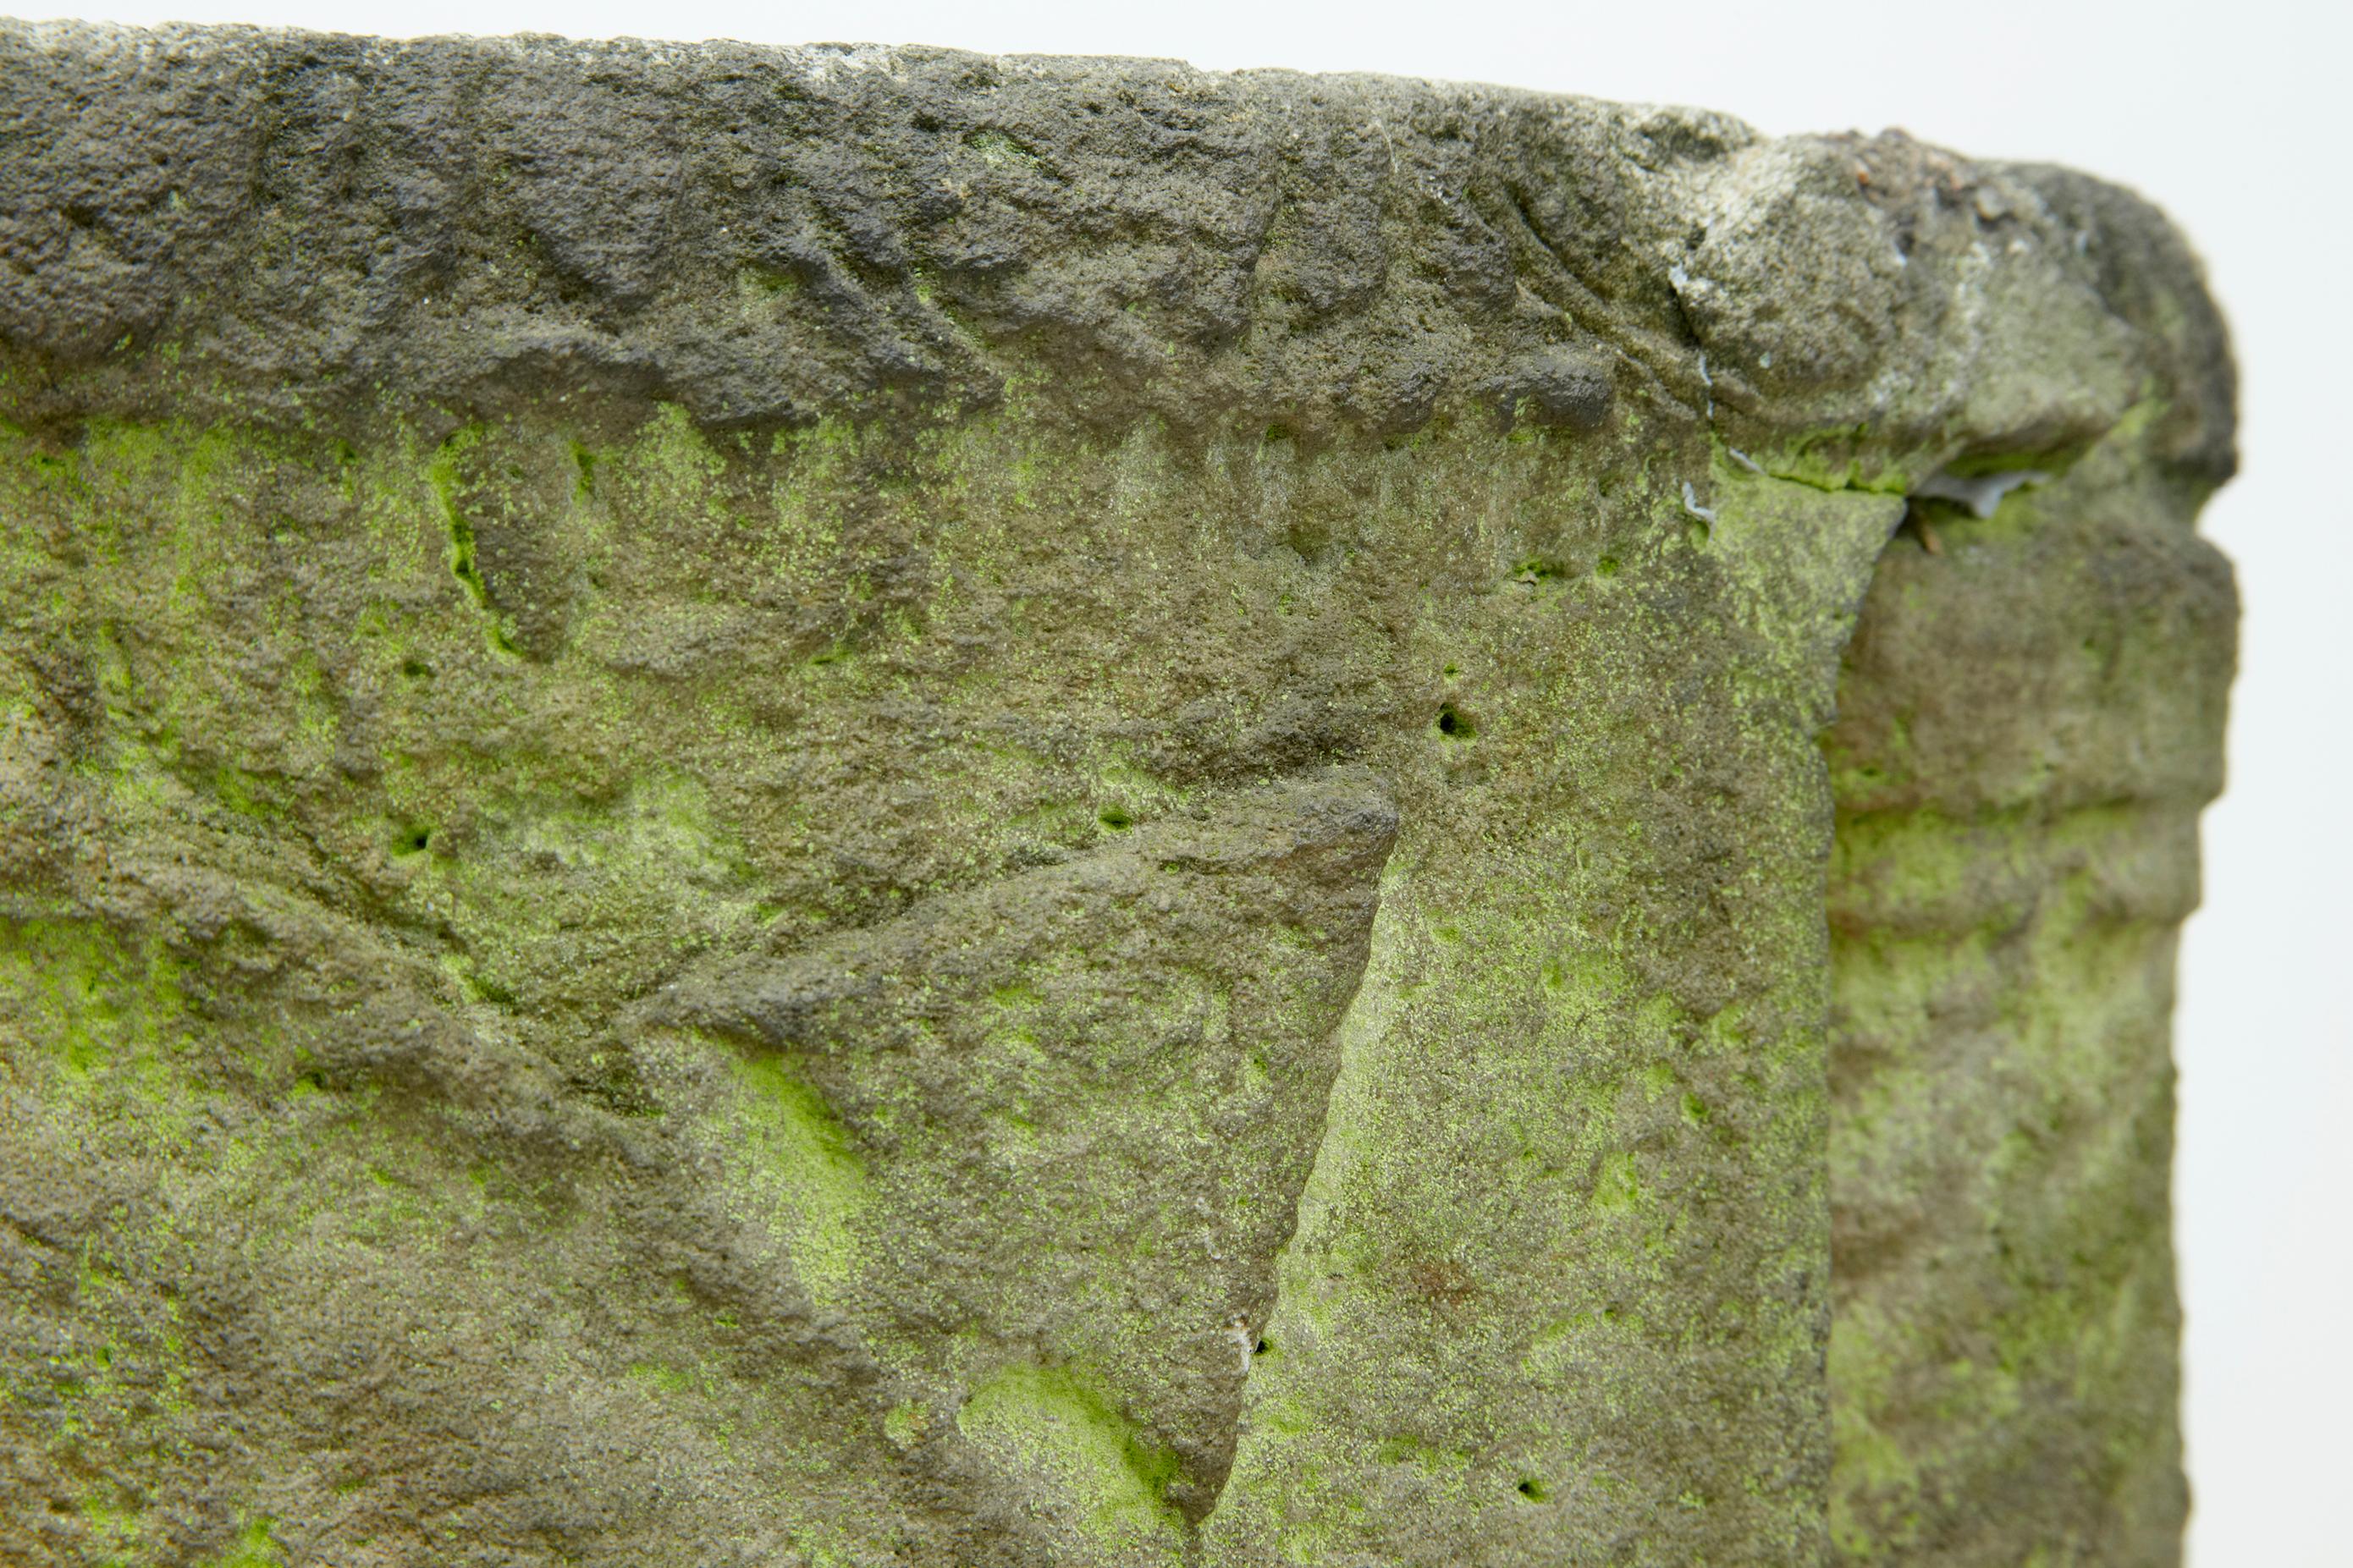 Unique Anglo Roman Limestone Sarcophagus 1